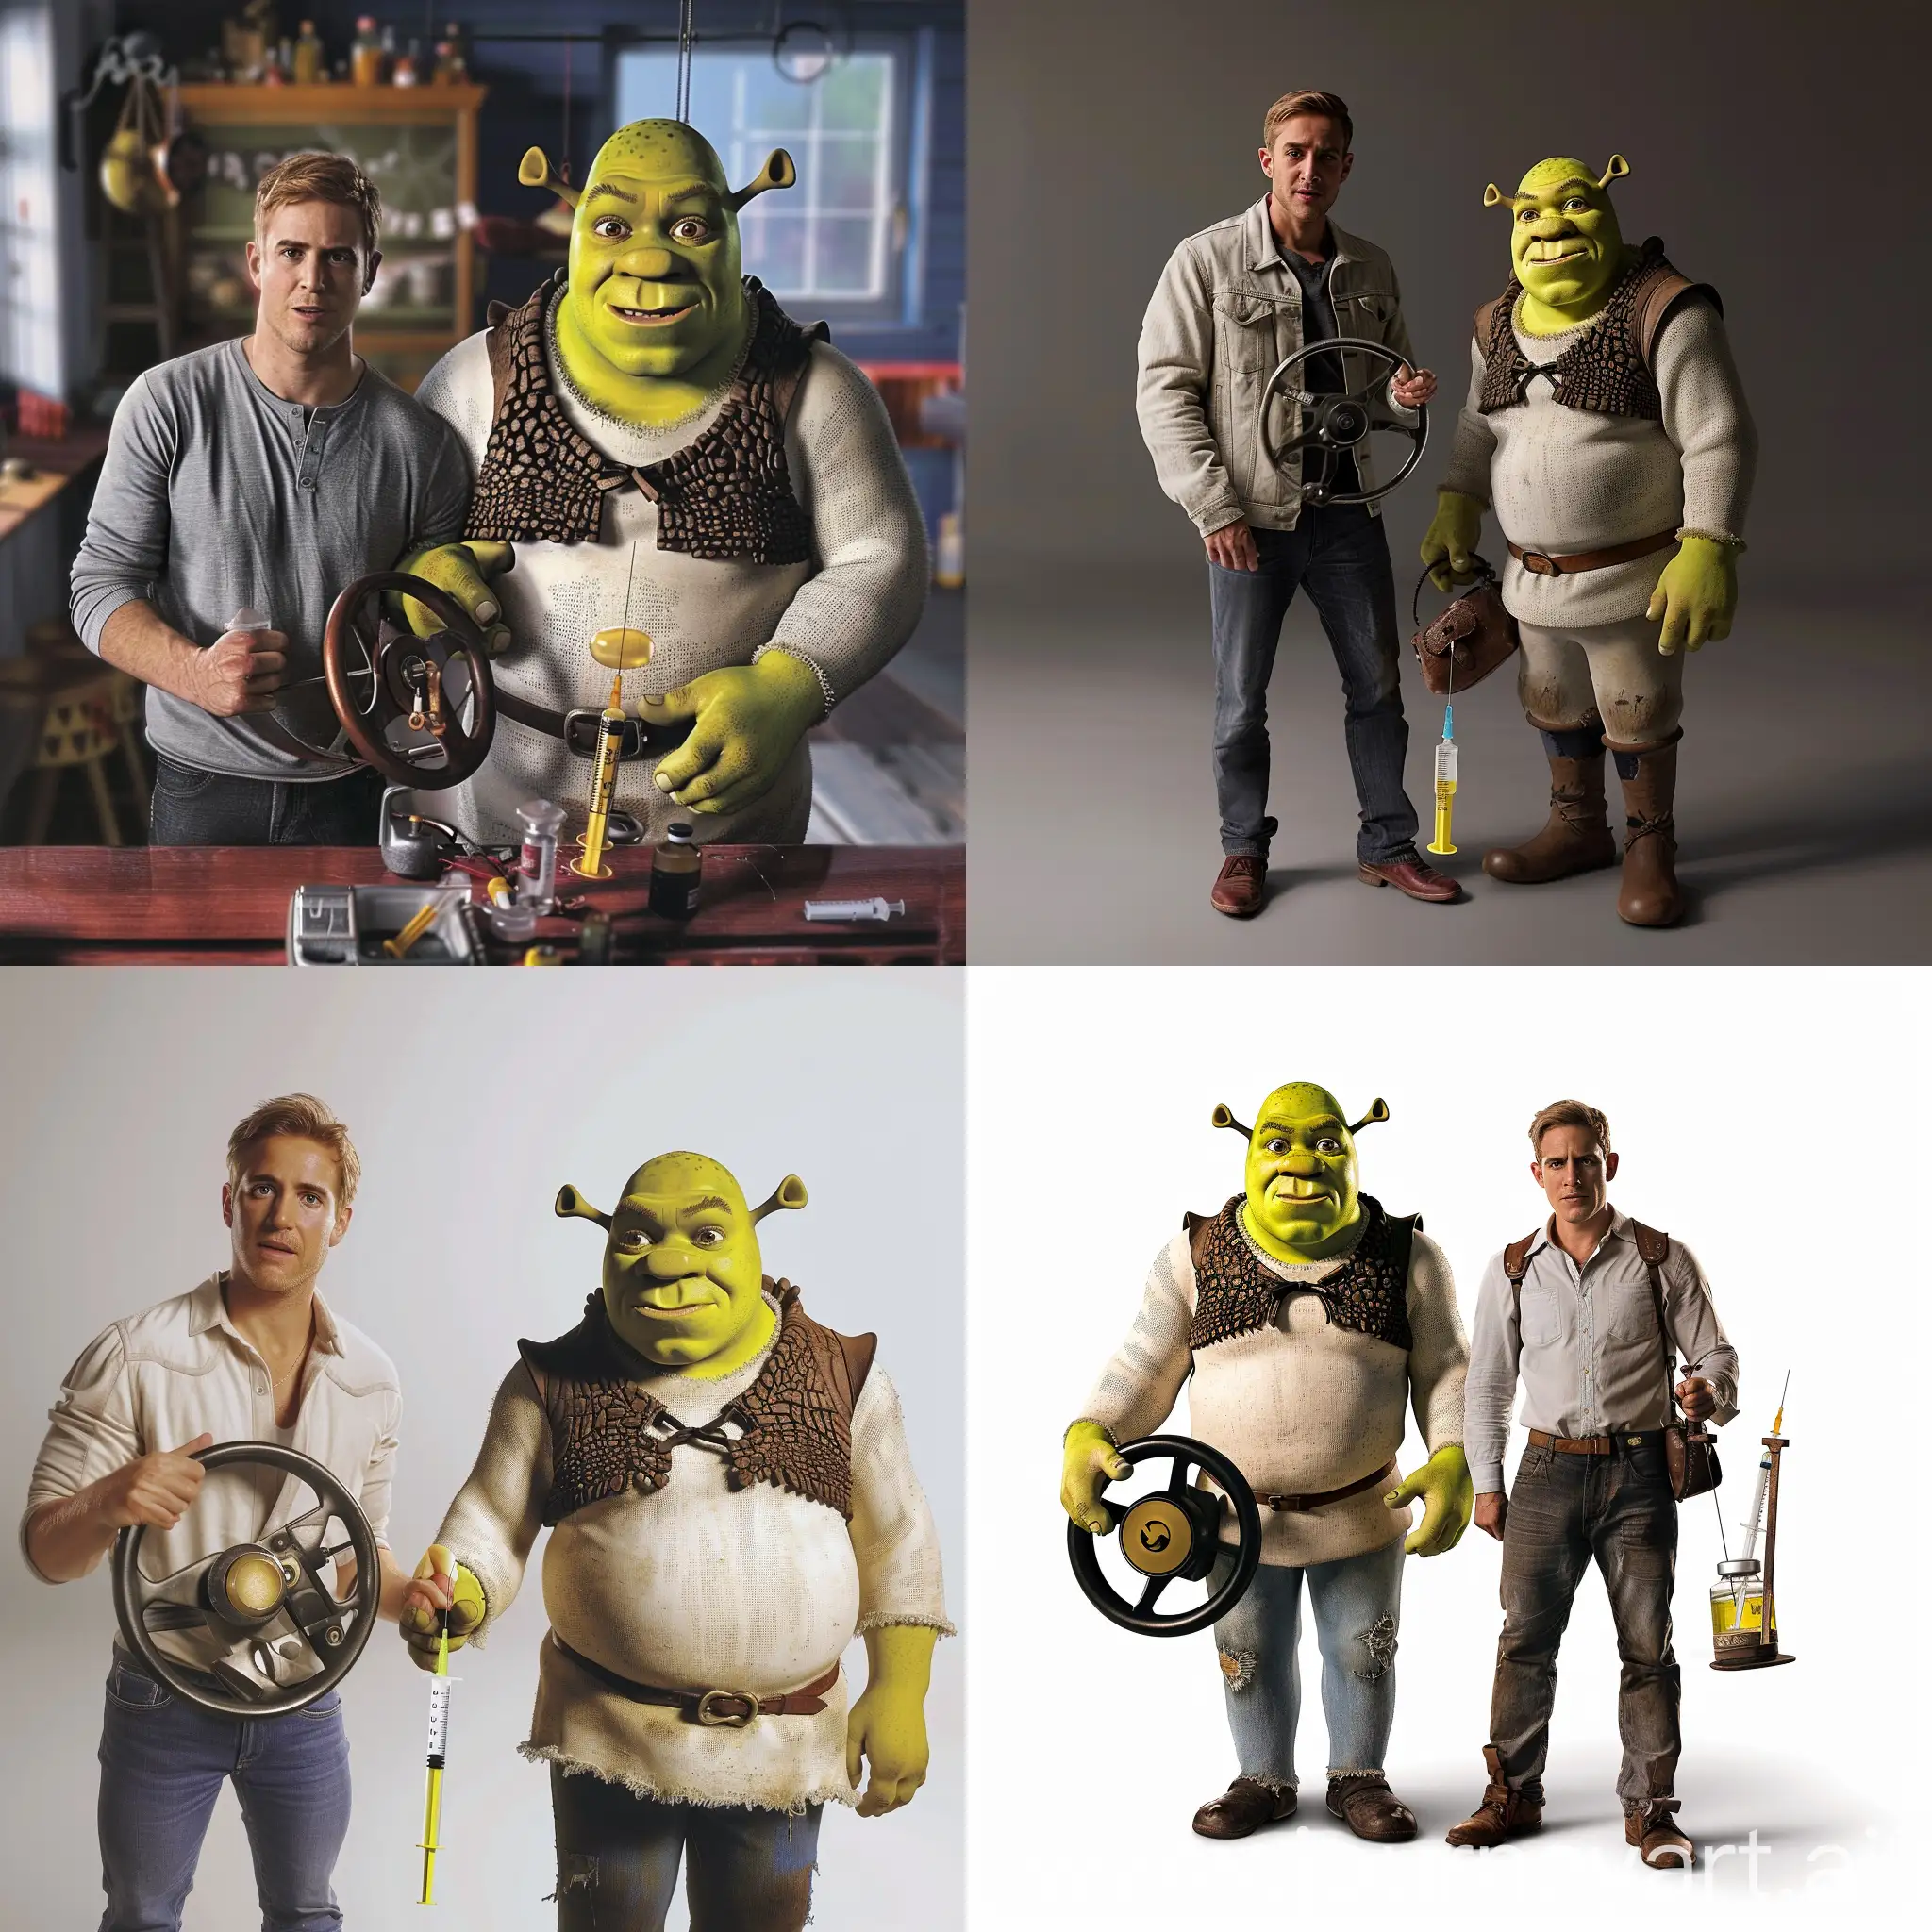 Ryan-Gosling-and-Shrek-Pose-with-Steering-Wheel-and-Syringe